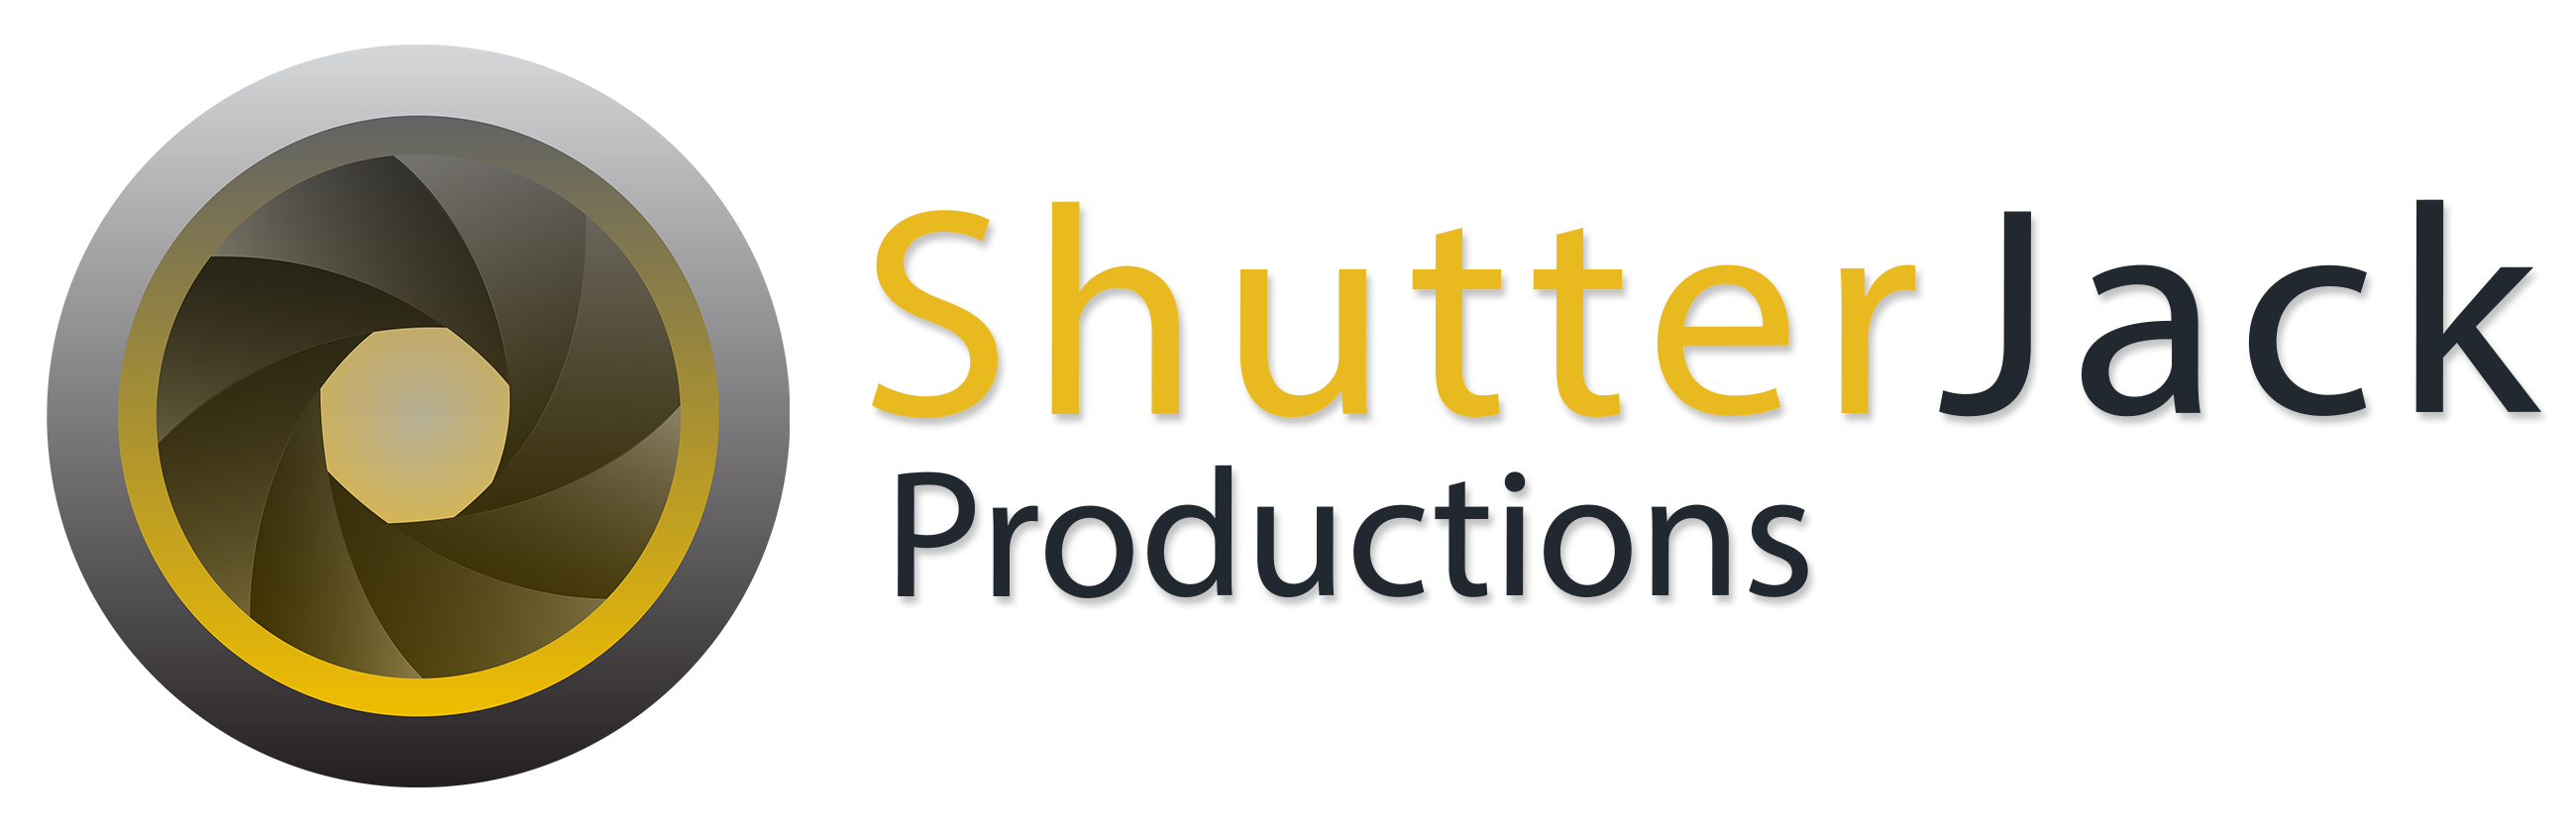 ShutterJack Productions